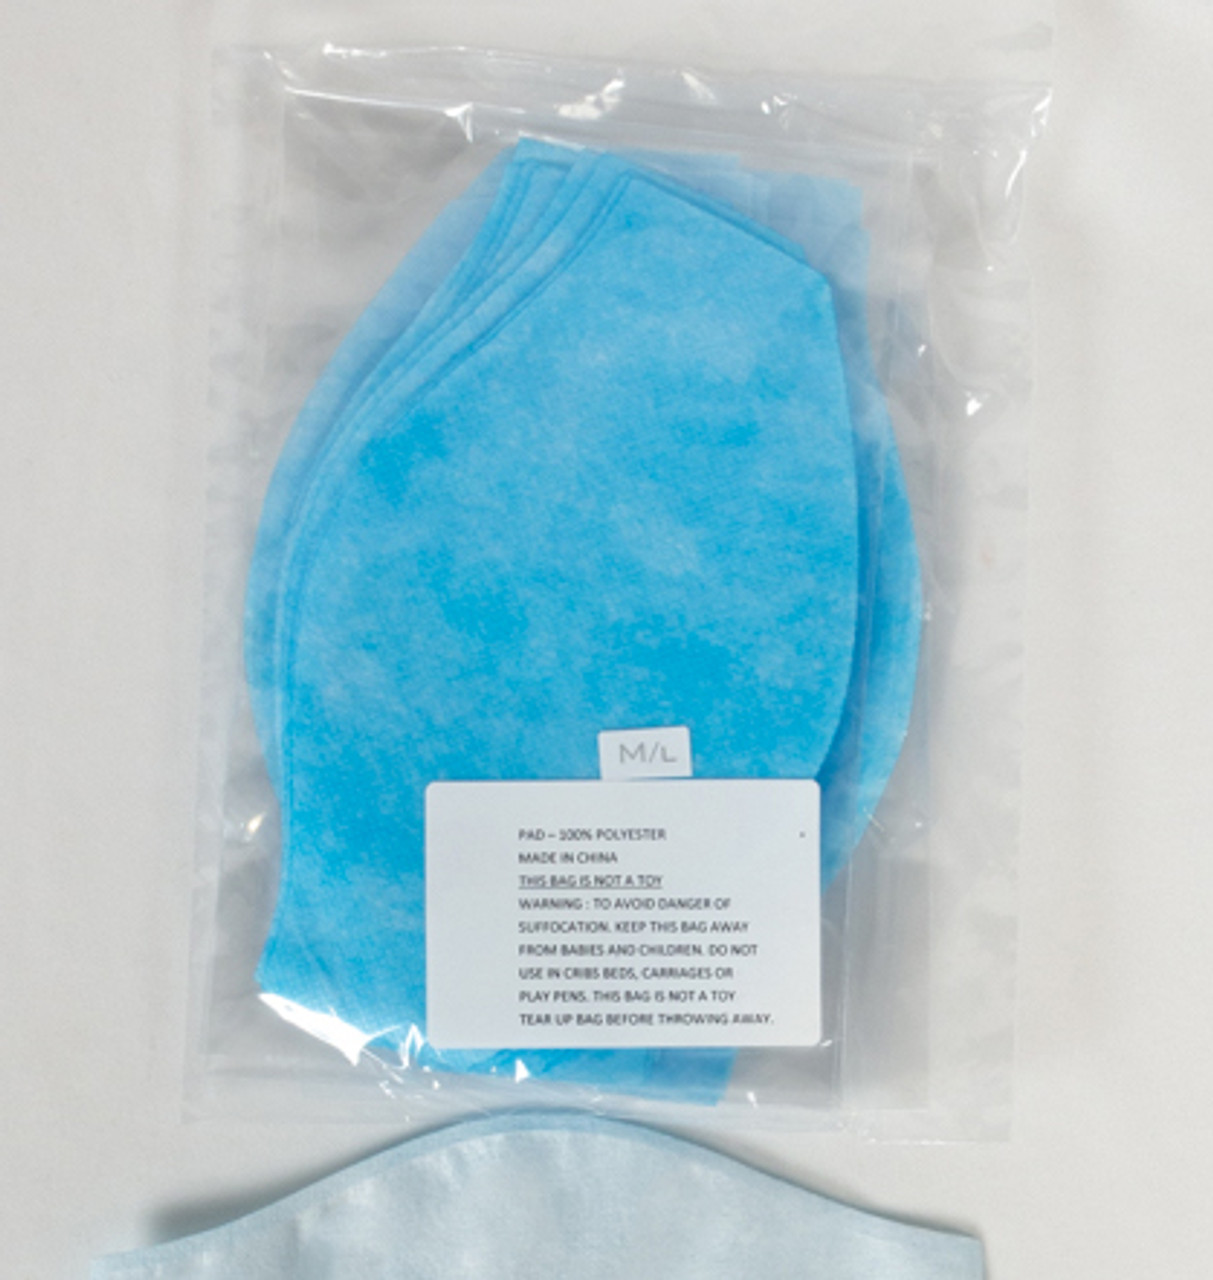 Double-Sided Adult Washable Cloth Masks (Blue Louis Vuitton